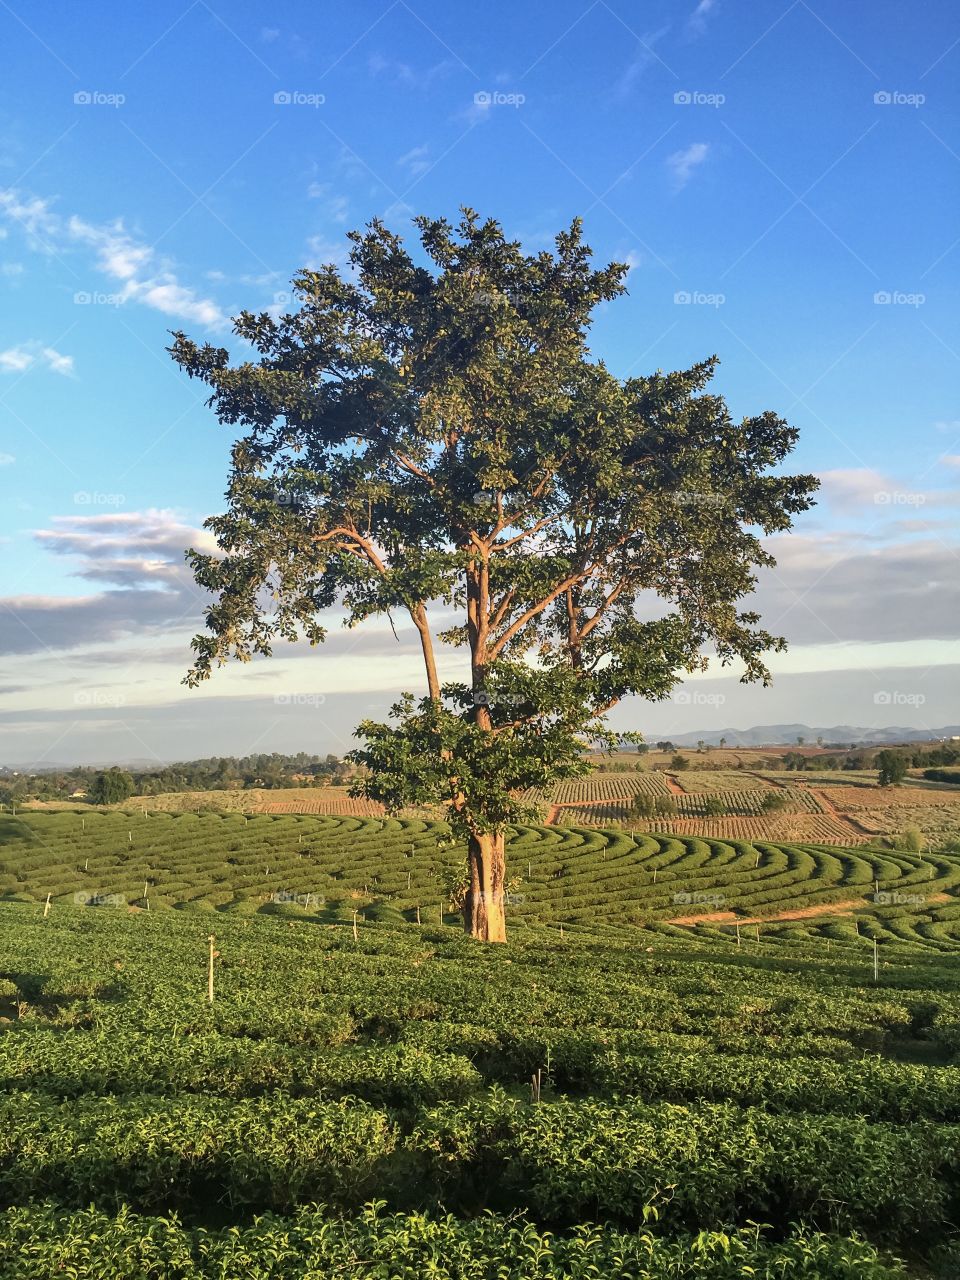 One last stand tree among Tea Plantation